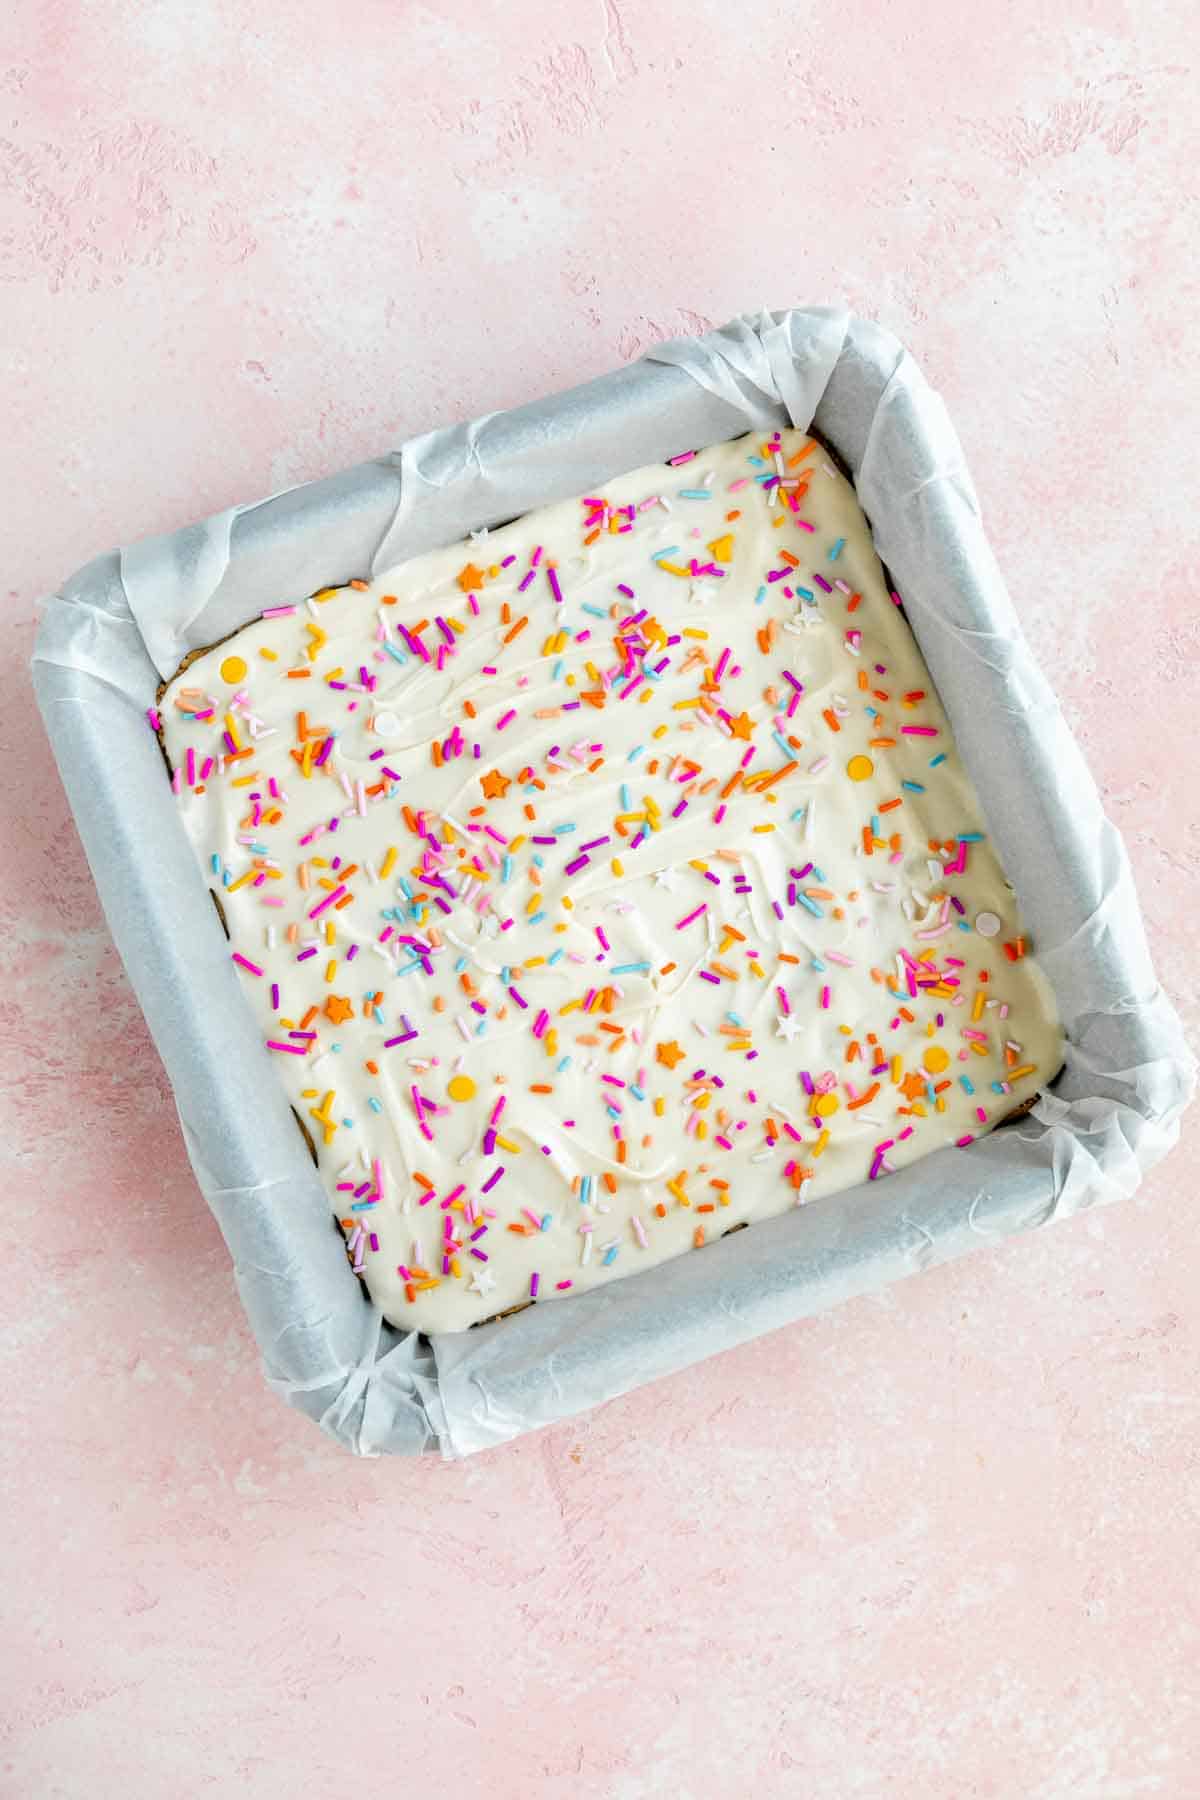 birthday cake protein bars inside a baking dish